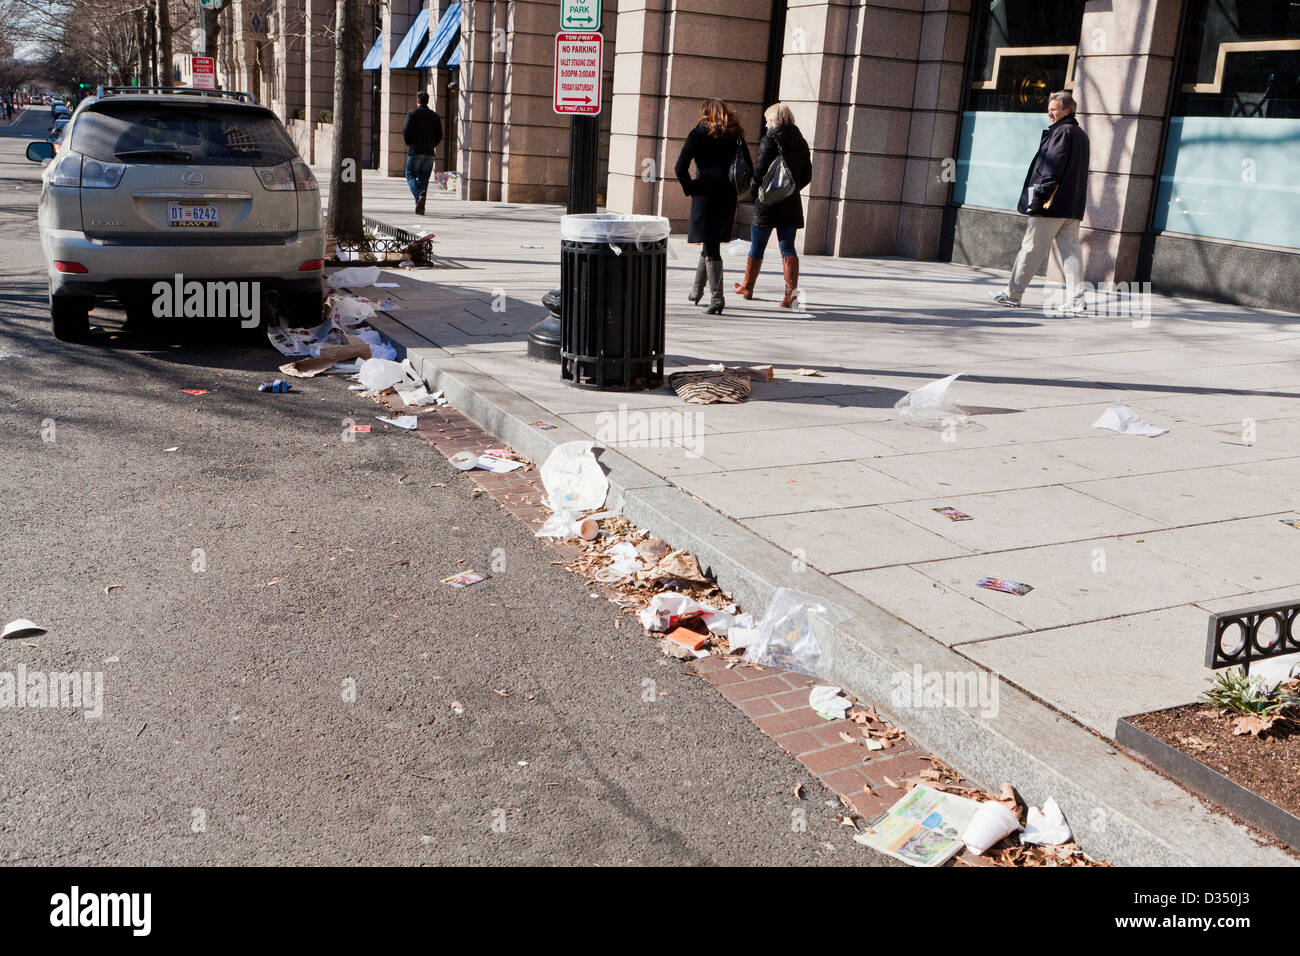 Roadside litter - USA Stock Photo